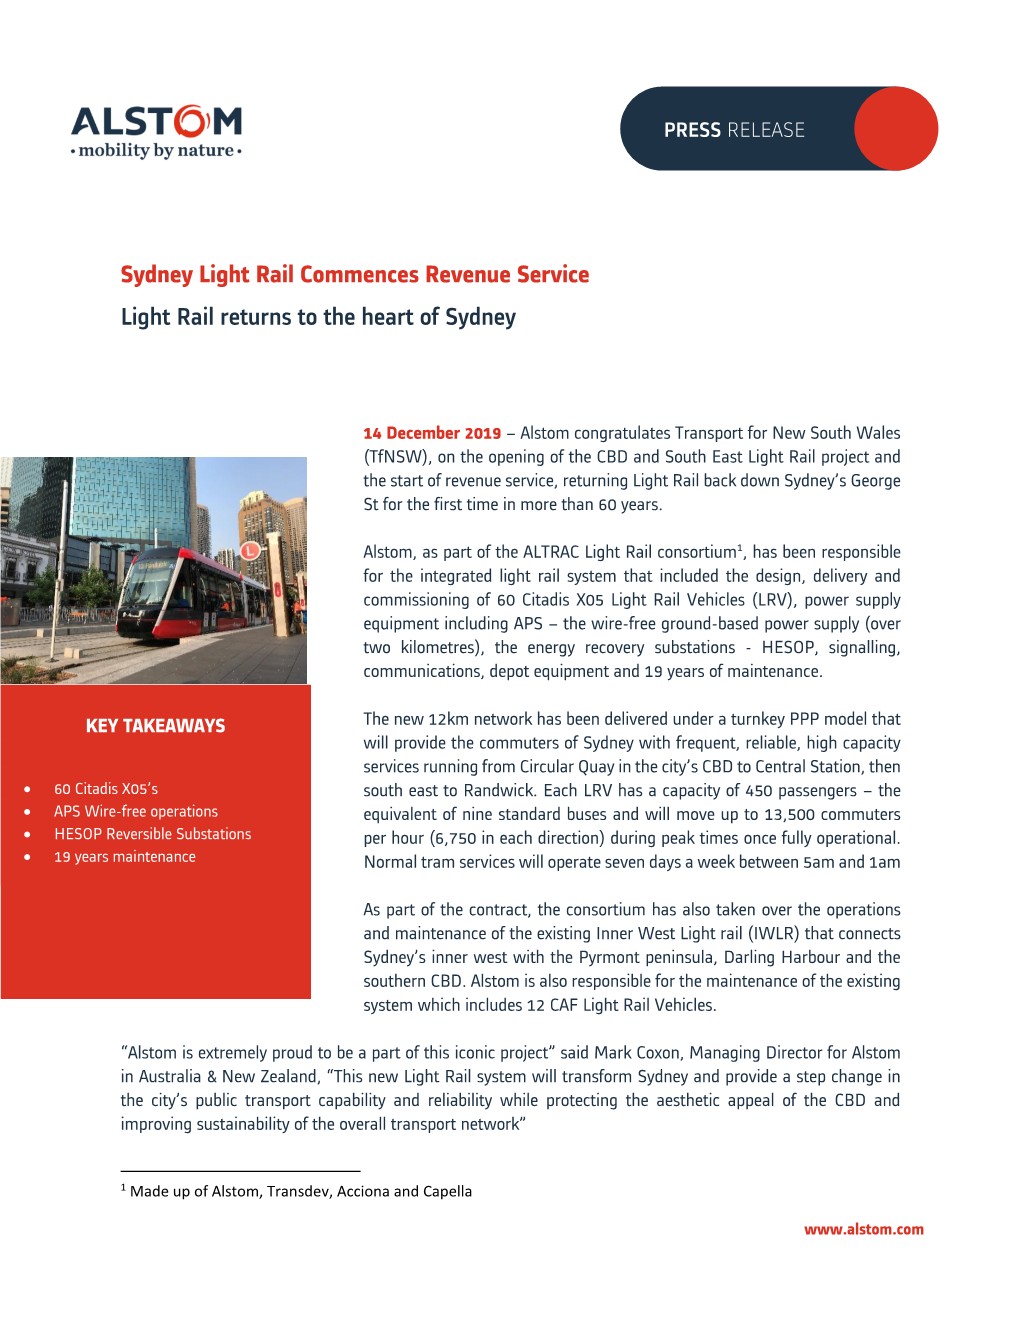 Sydney Light Rail Commences Revenue Service Light Rail Returns to the Heart of Sydney